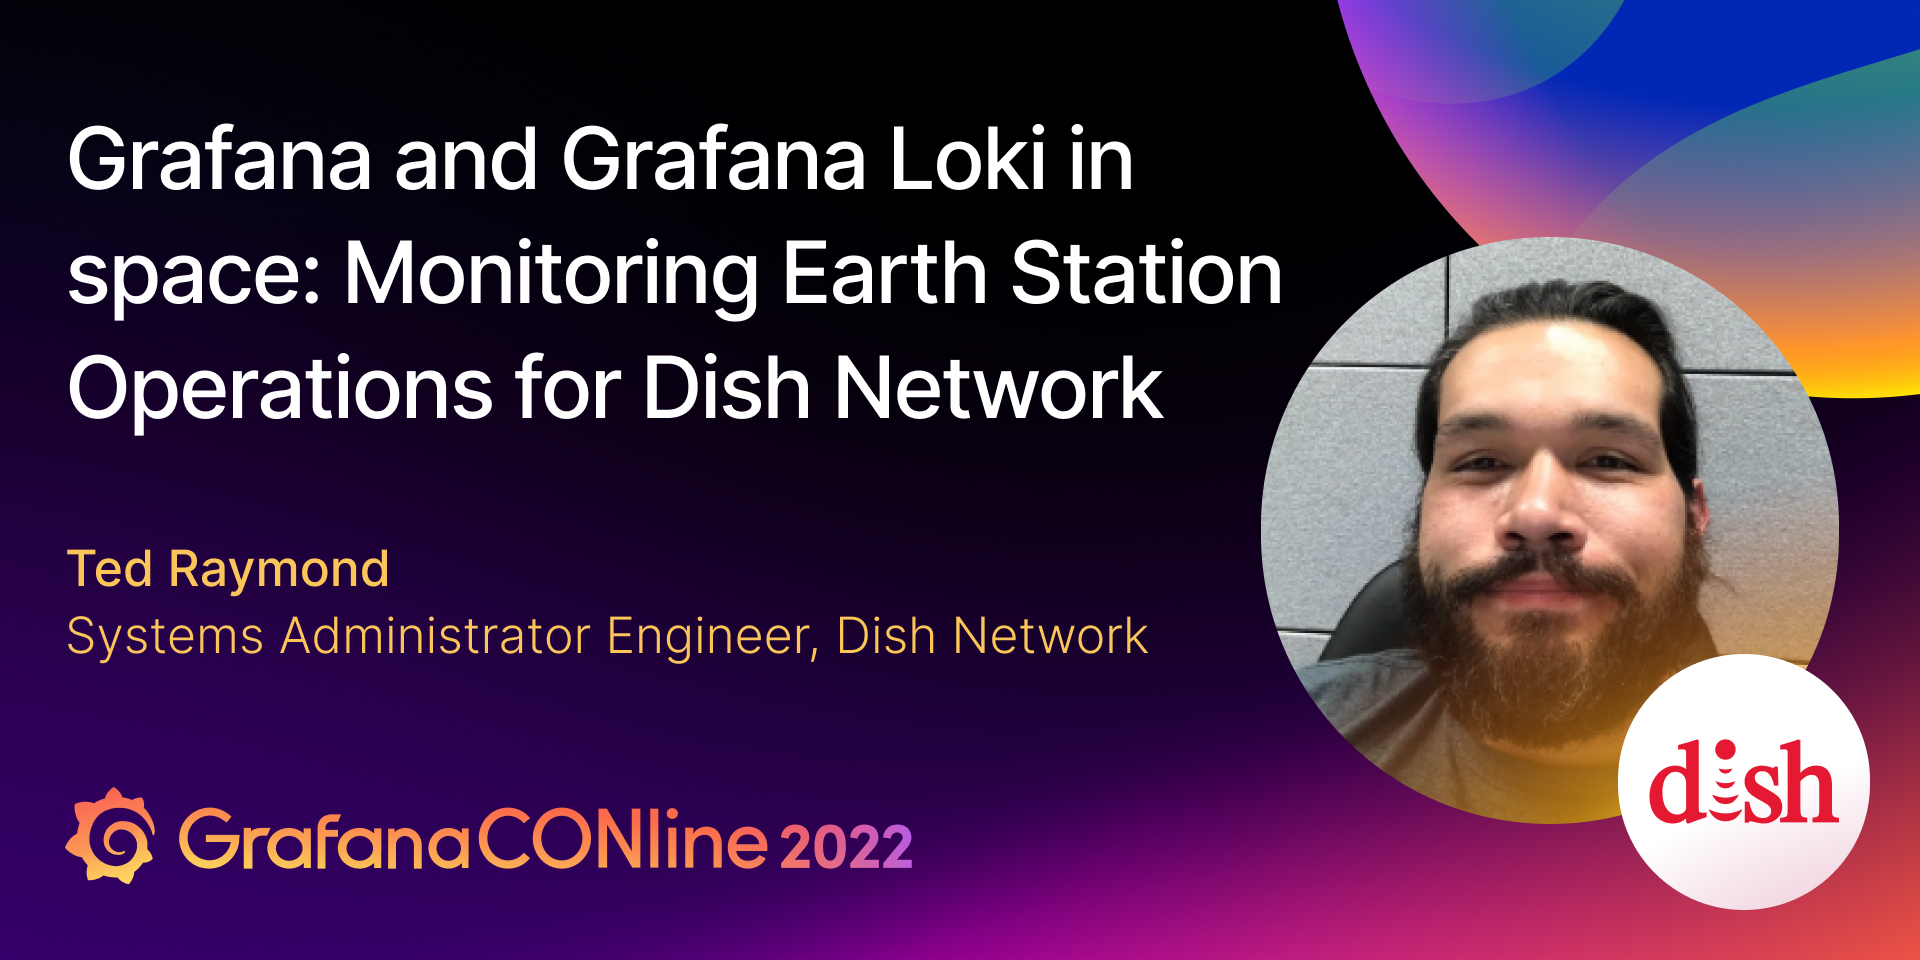 Dish network session at GrafanaCONline 2022